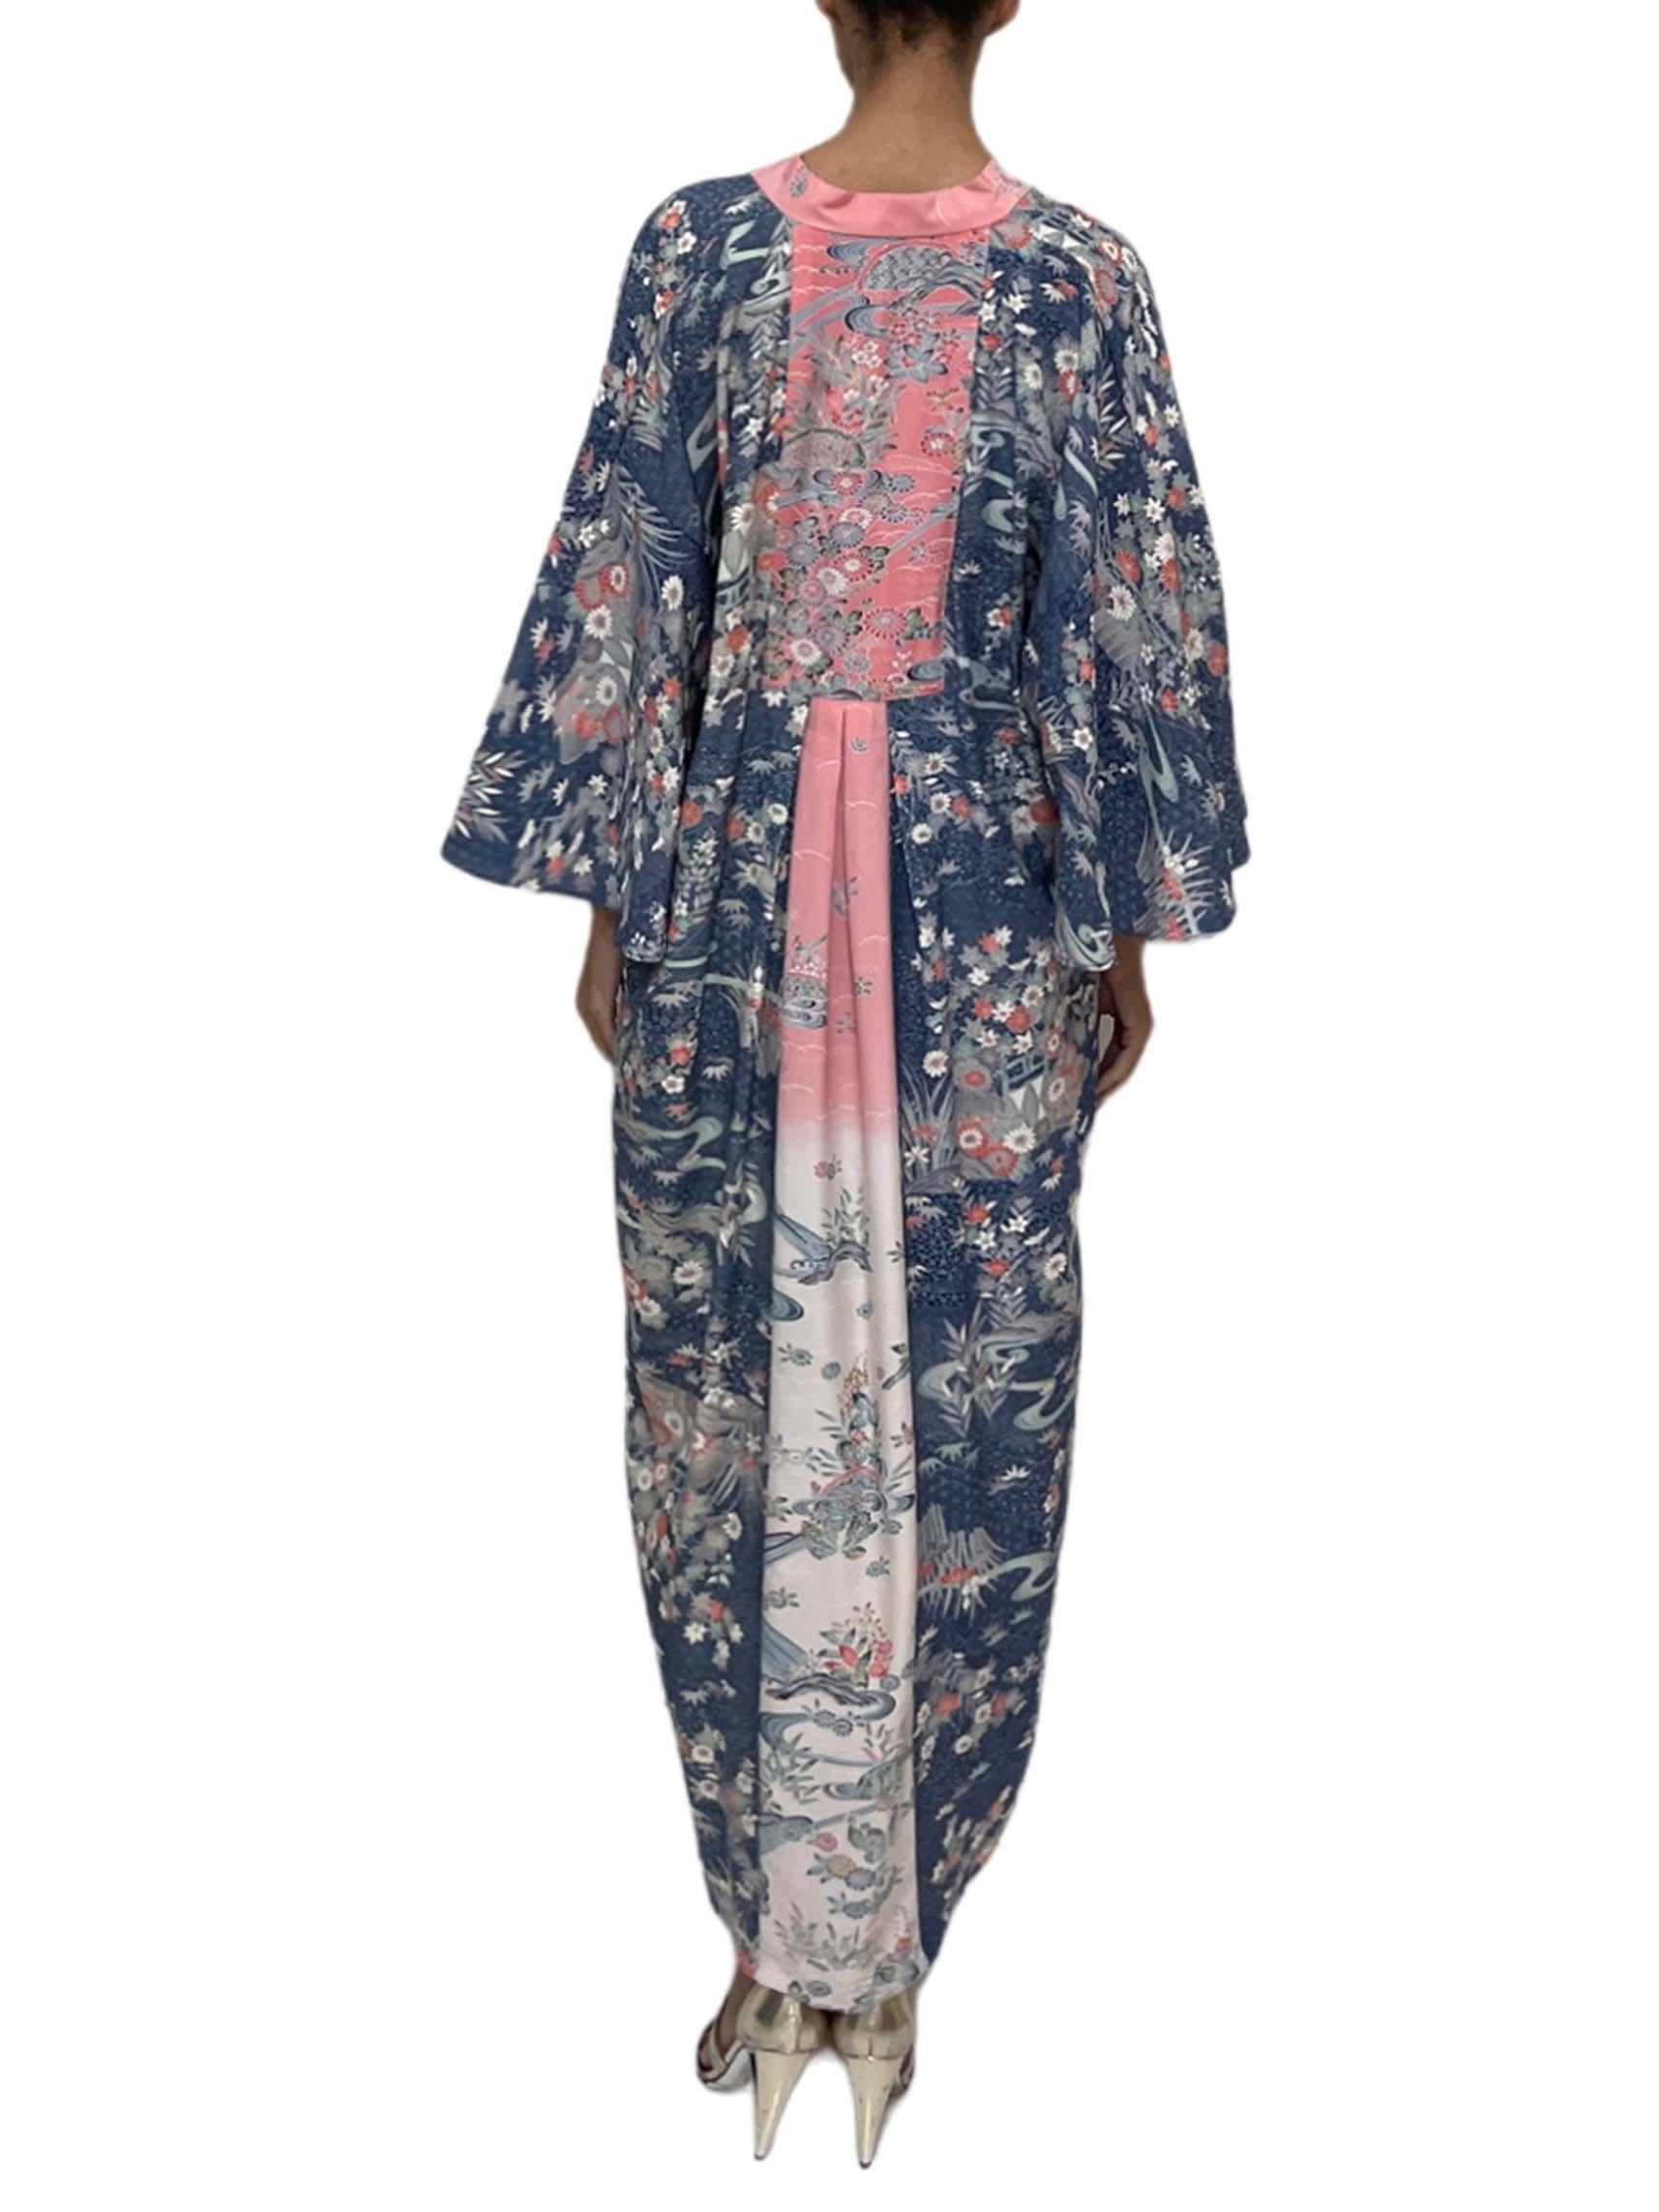 MORPHEW COLLECTION Navy Blue, White & Pink Floral Japanese Kimono Silk Kaftan For Sale 2